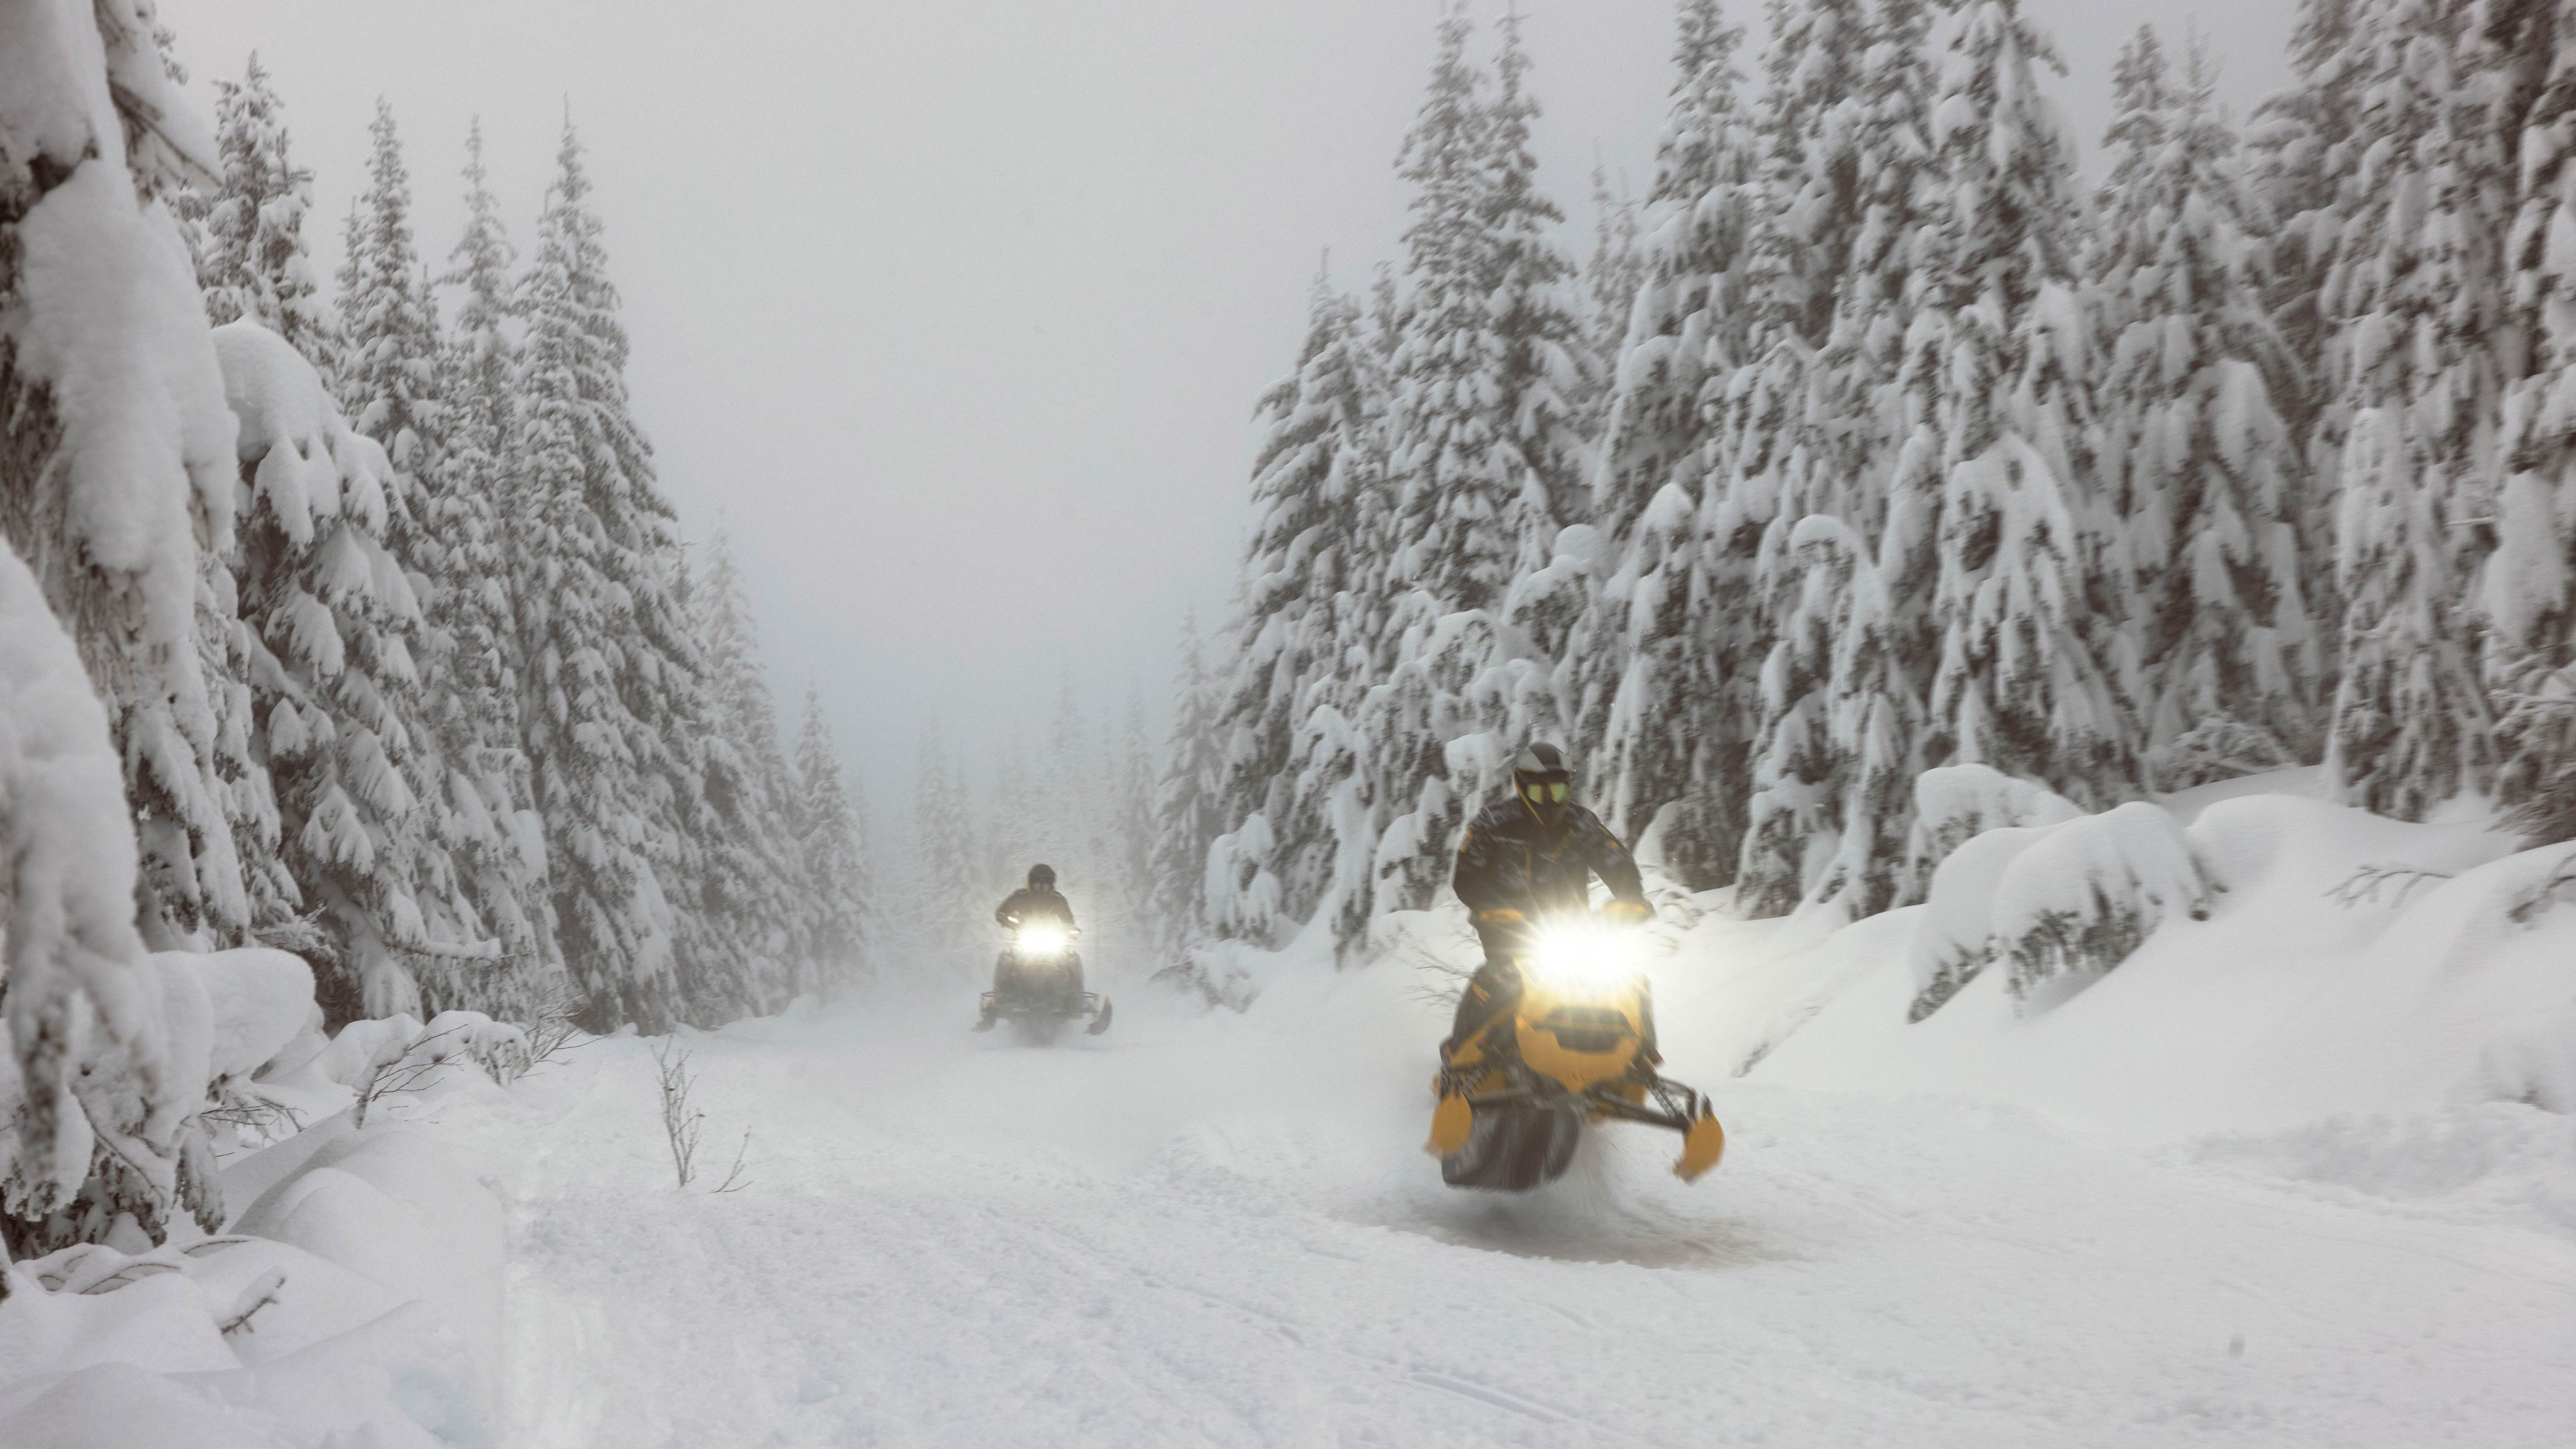 Ski-Doo riders on a snowy trail